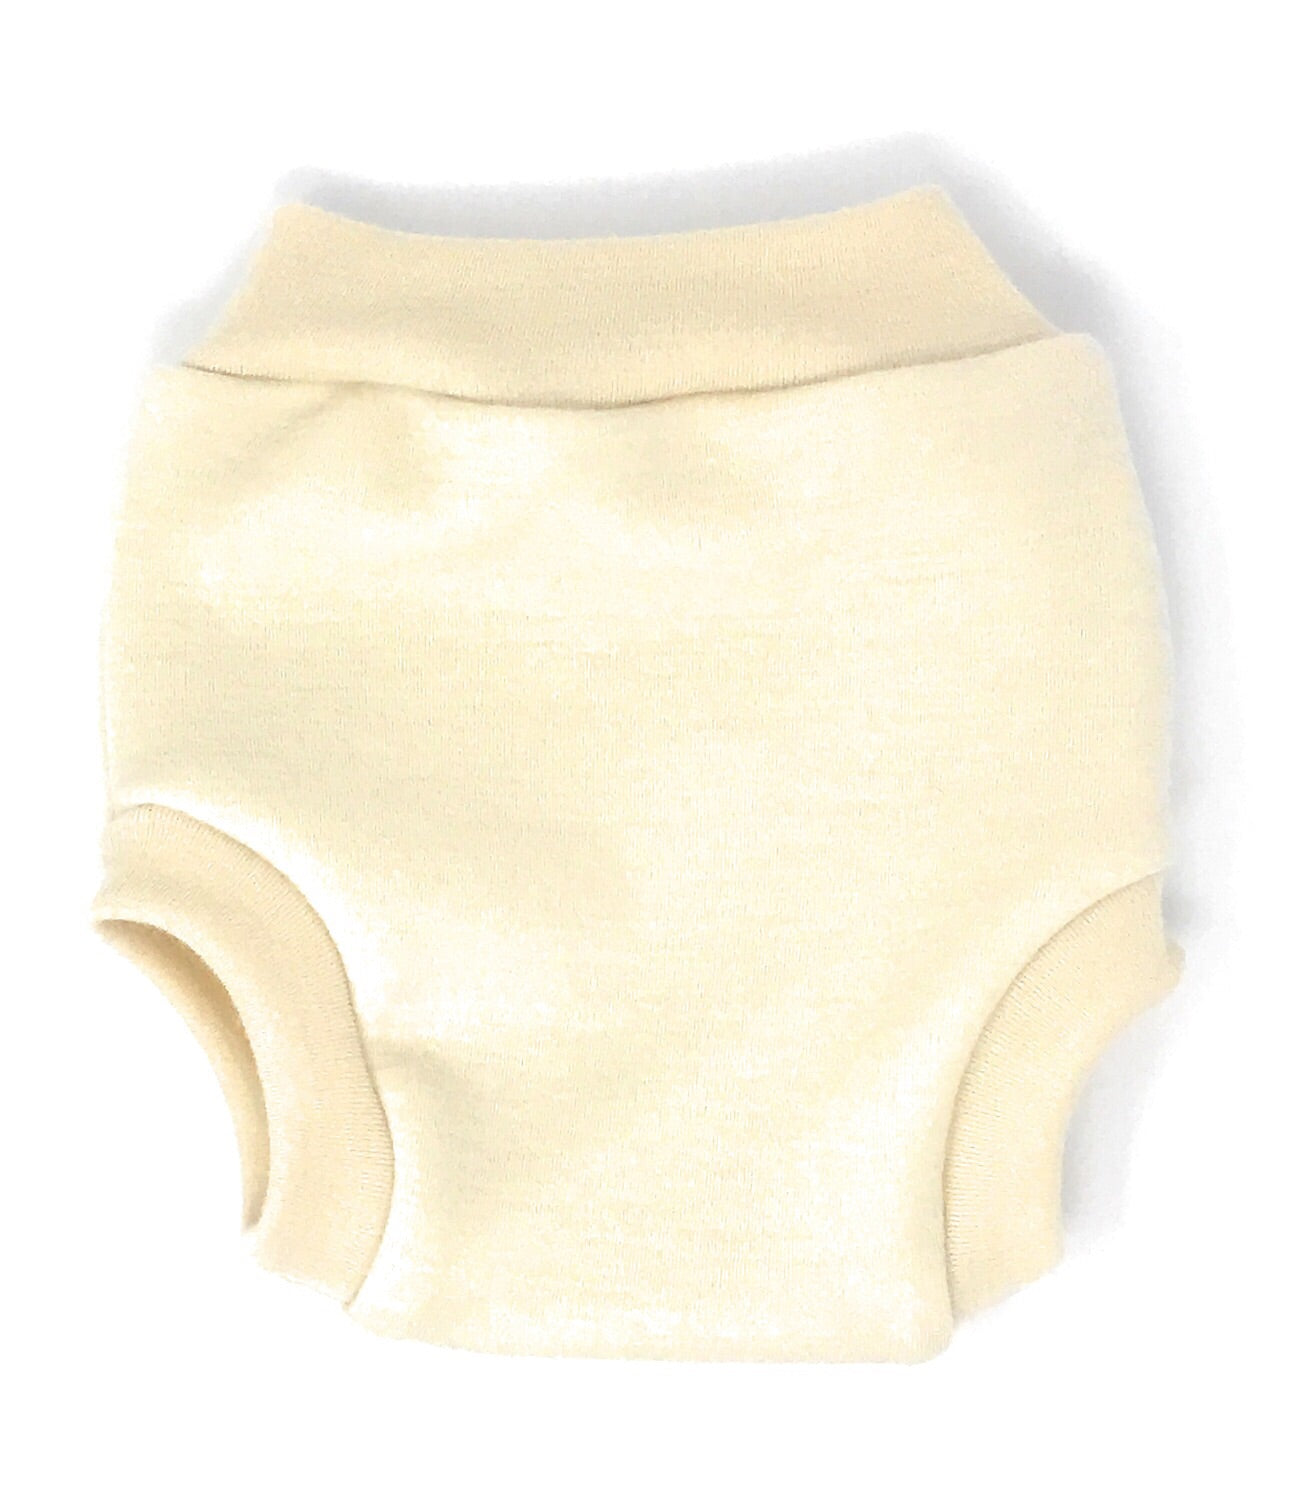 BabeeGreens Natural / Organic Merino Wool Diaper Covers Large